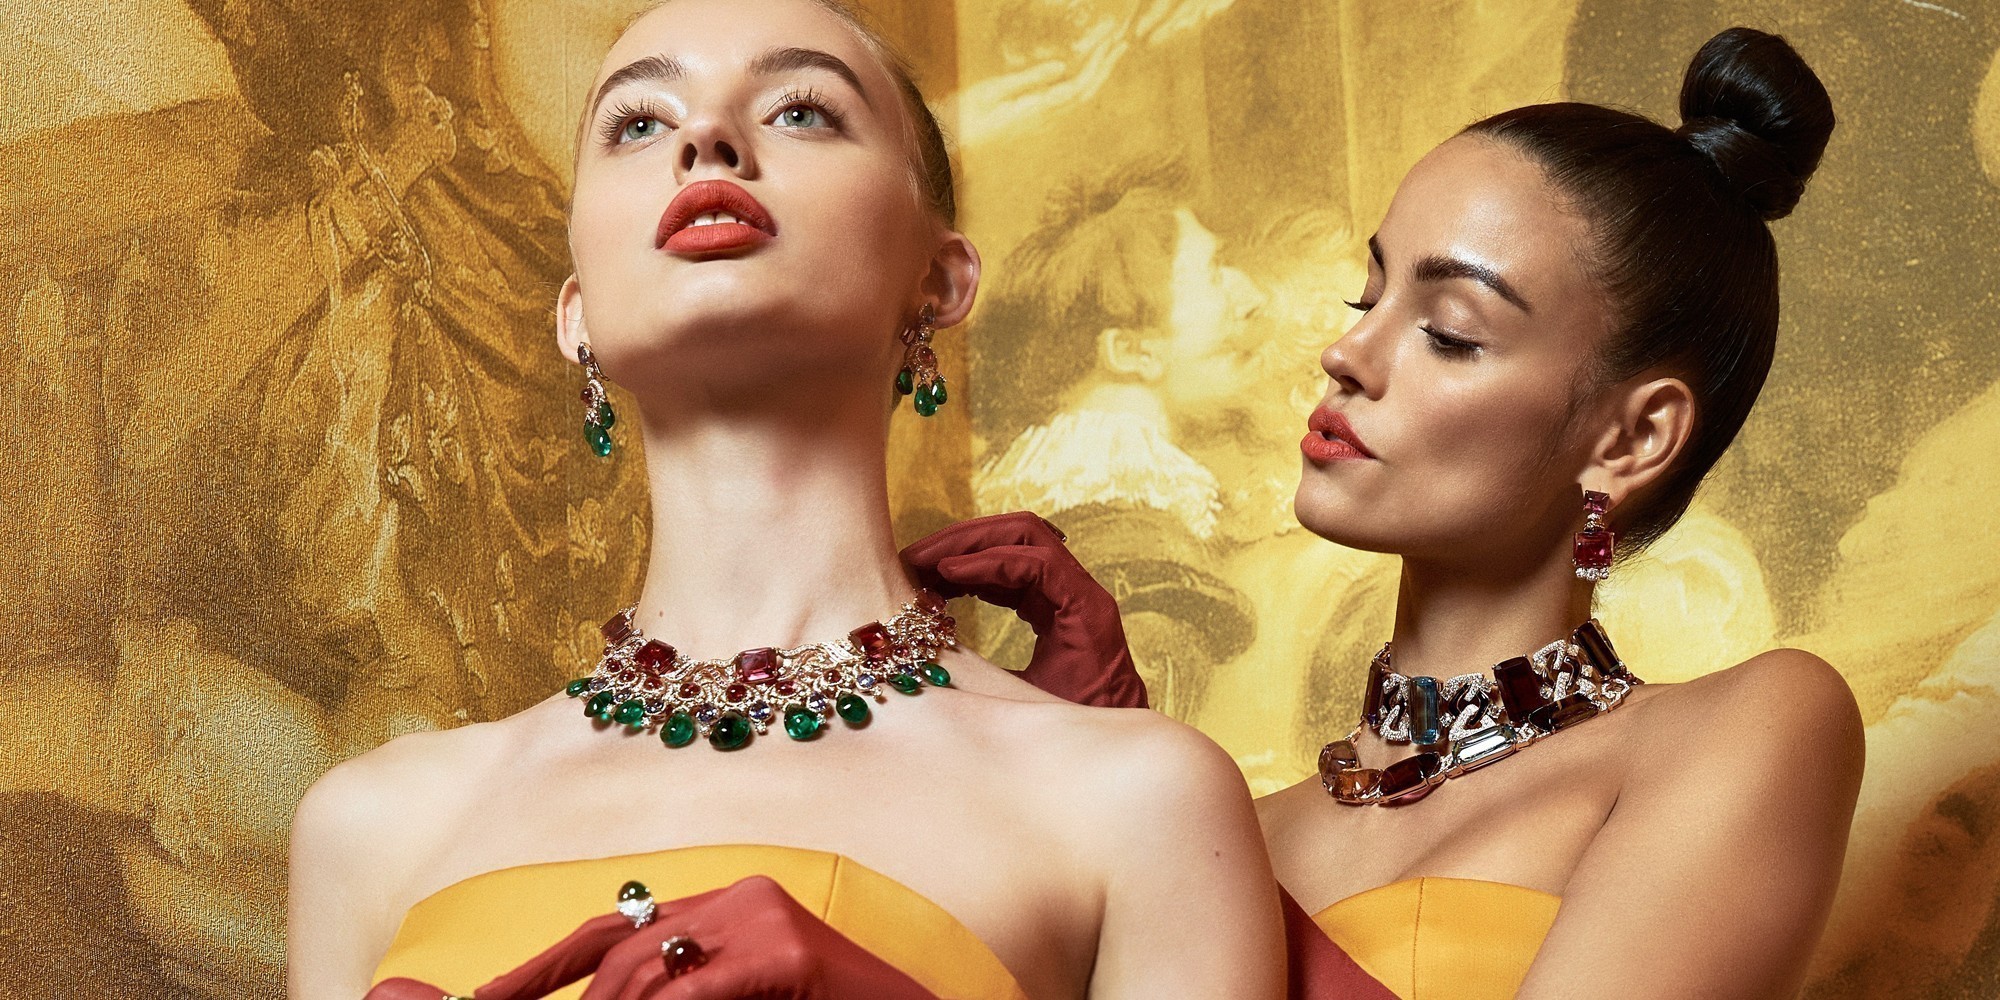 Bulgari's Cinemagia hihg jewellery enters a new dimension